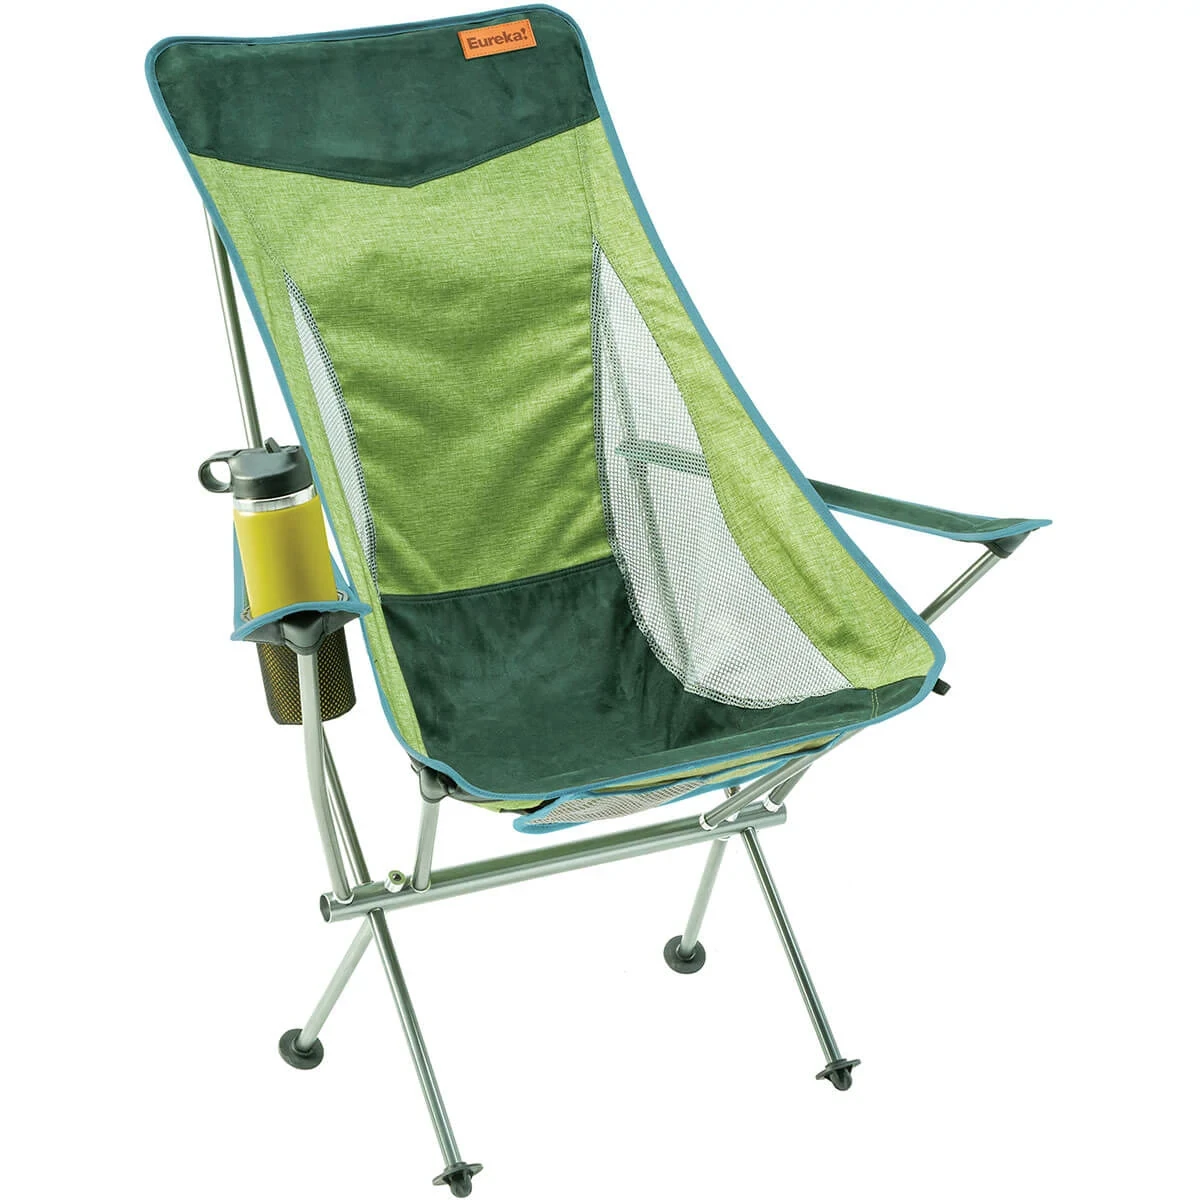 Eureka! Tagalong Highback Camp Chair